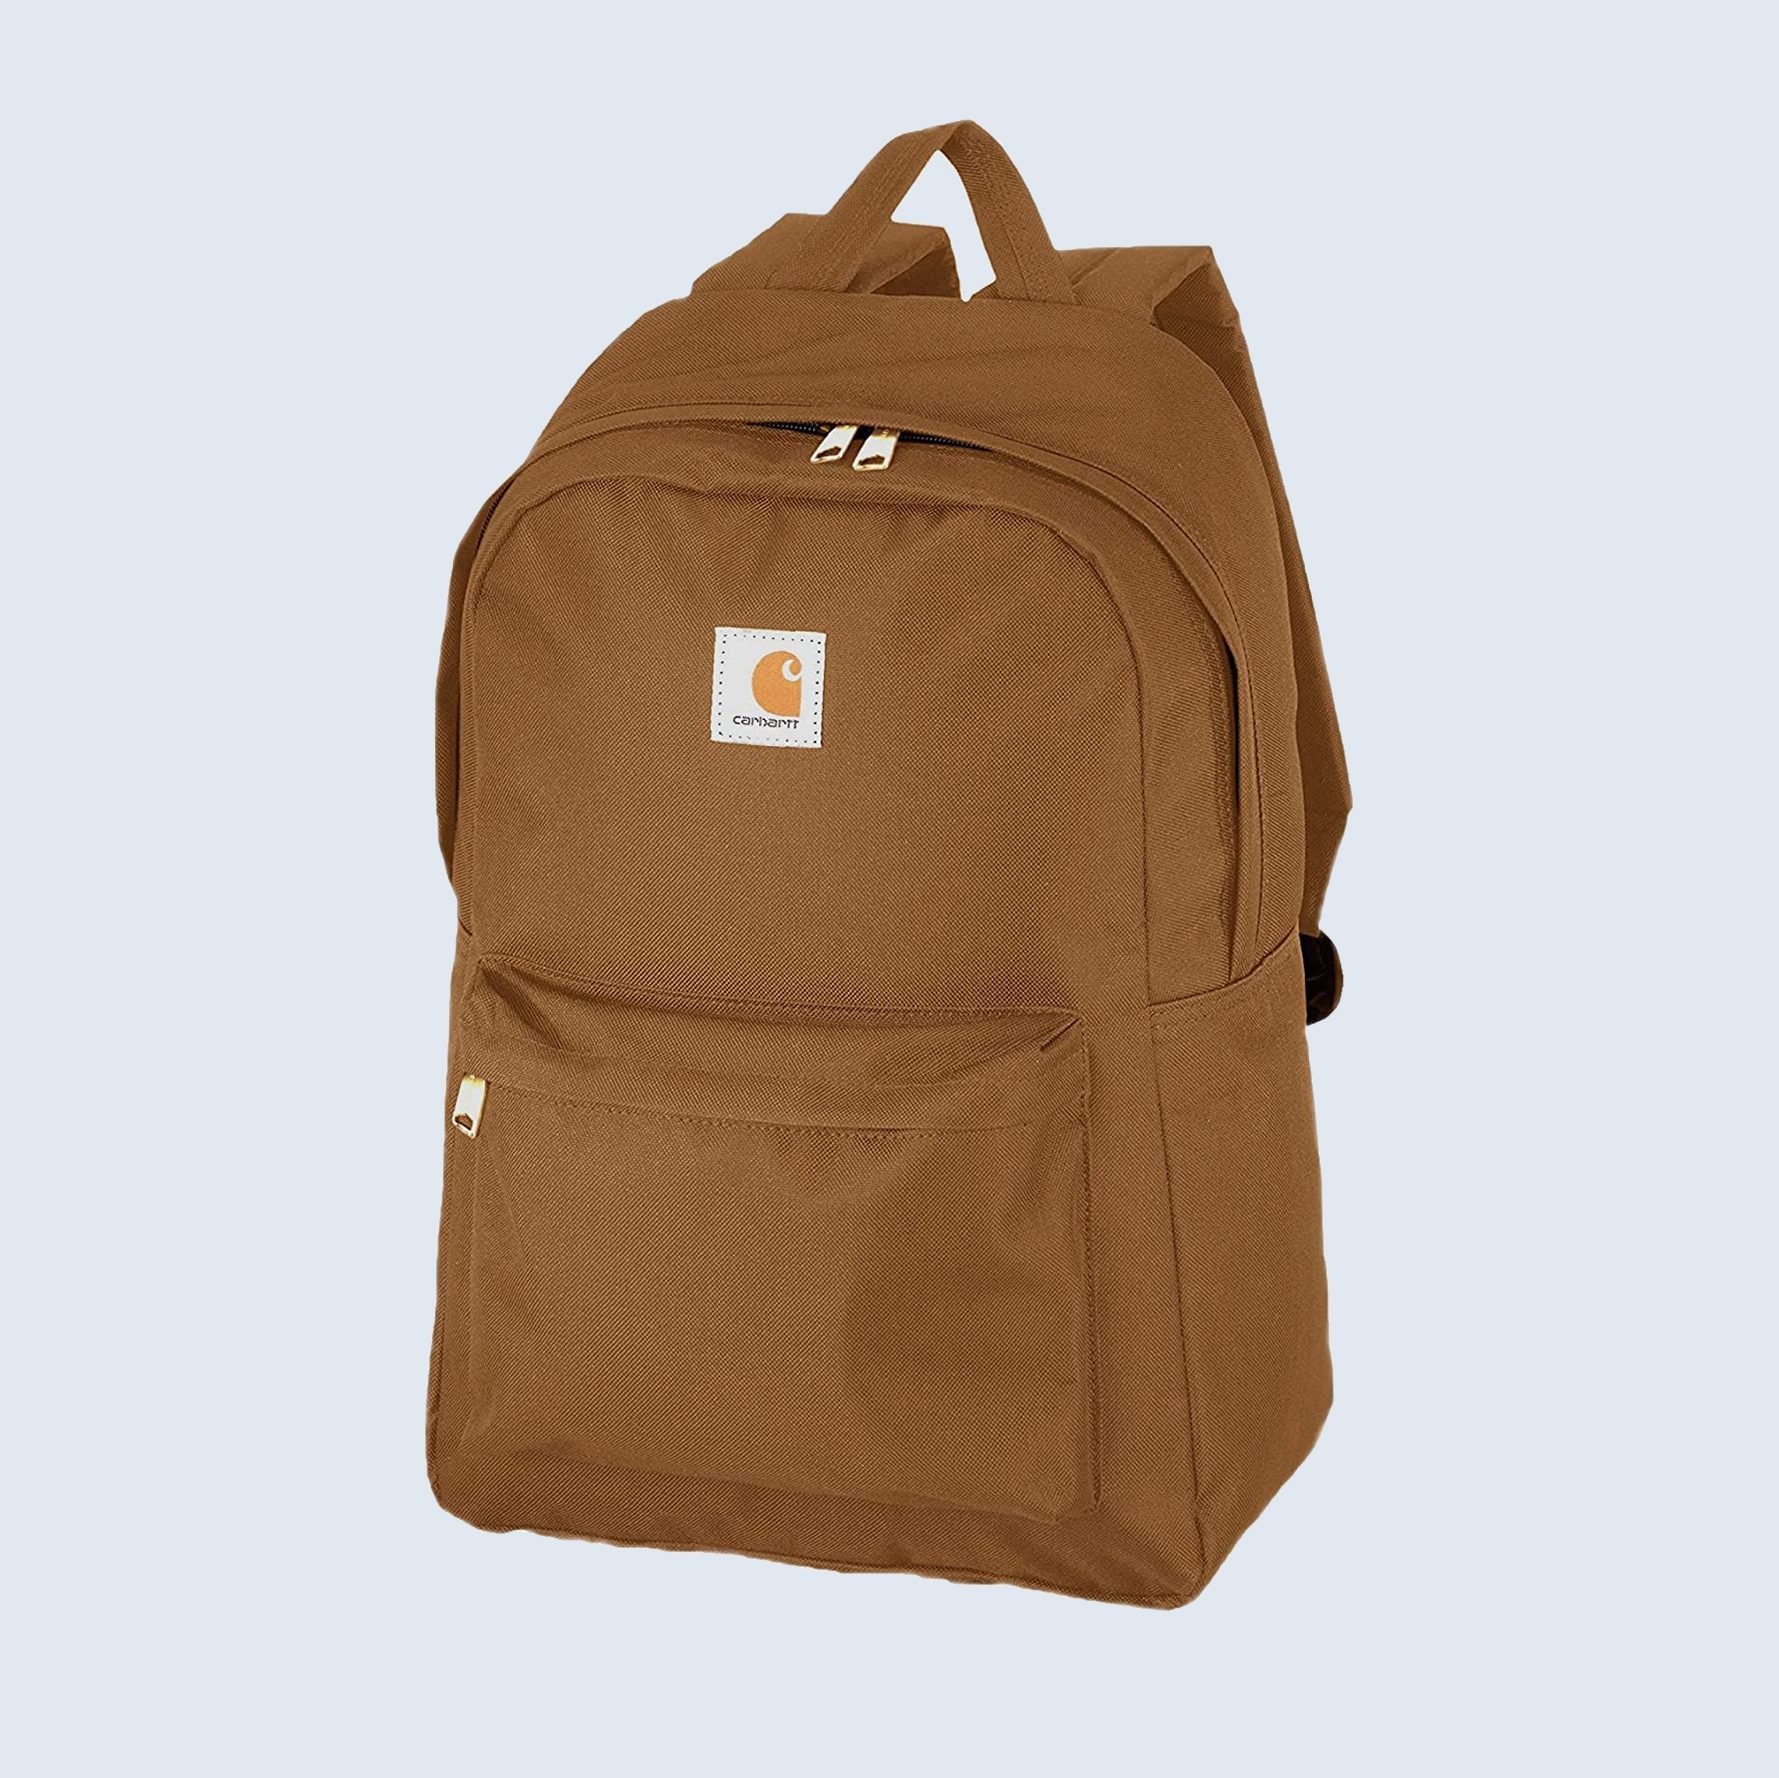 Carhartt backpack